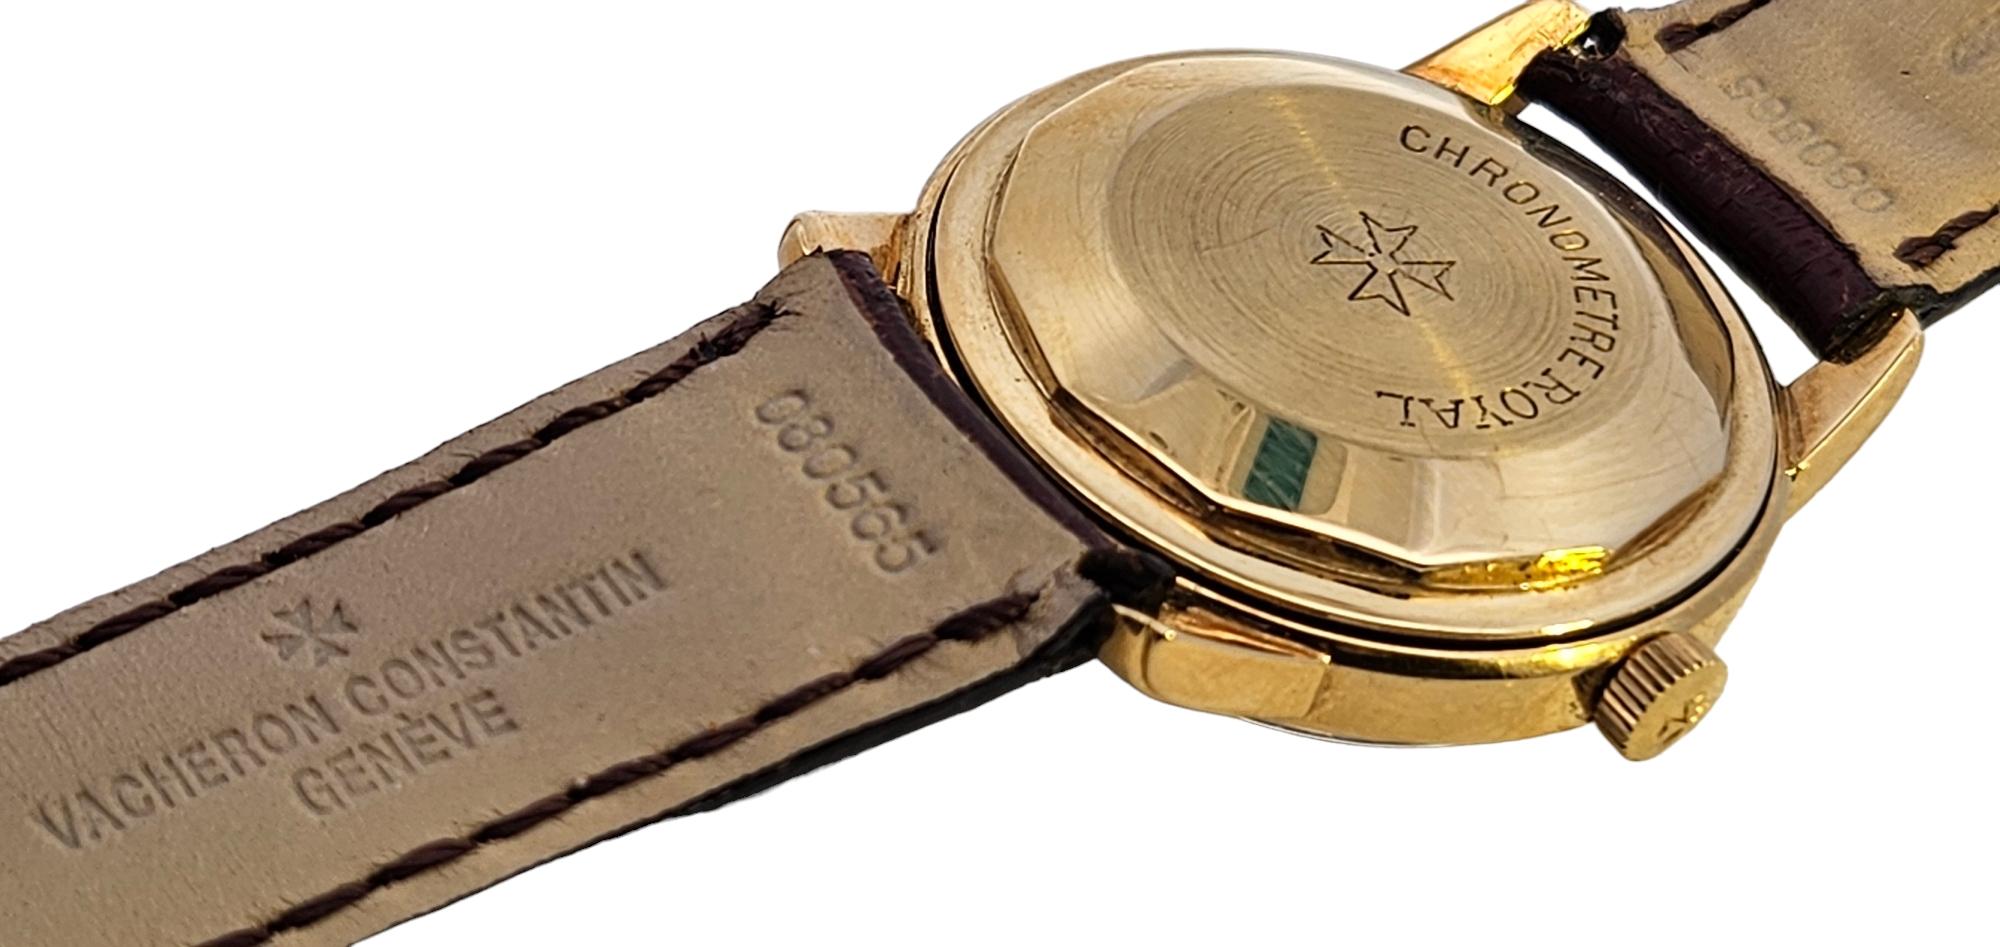 Vacheron Constantin Chronometre Royal Wrist Watch For Sale 6